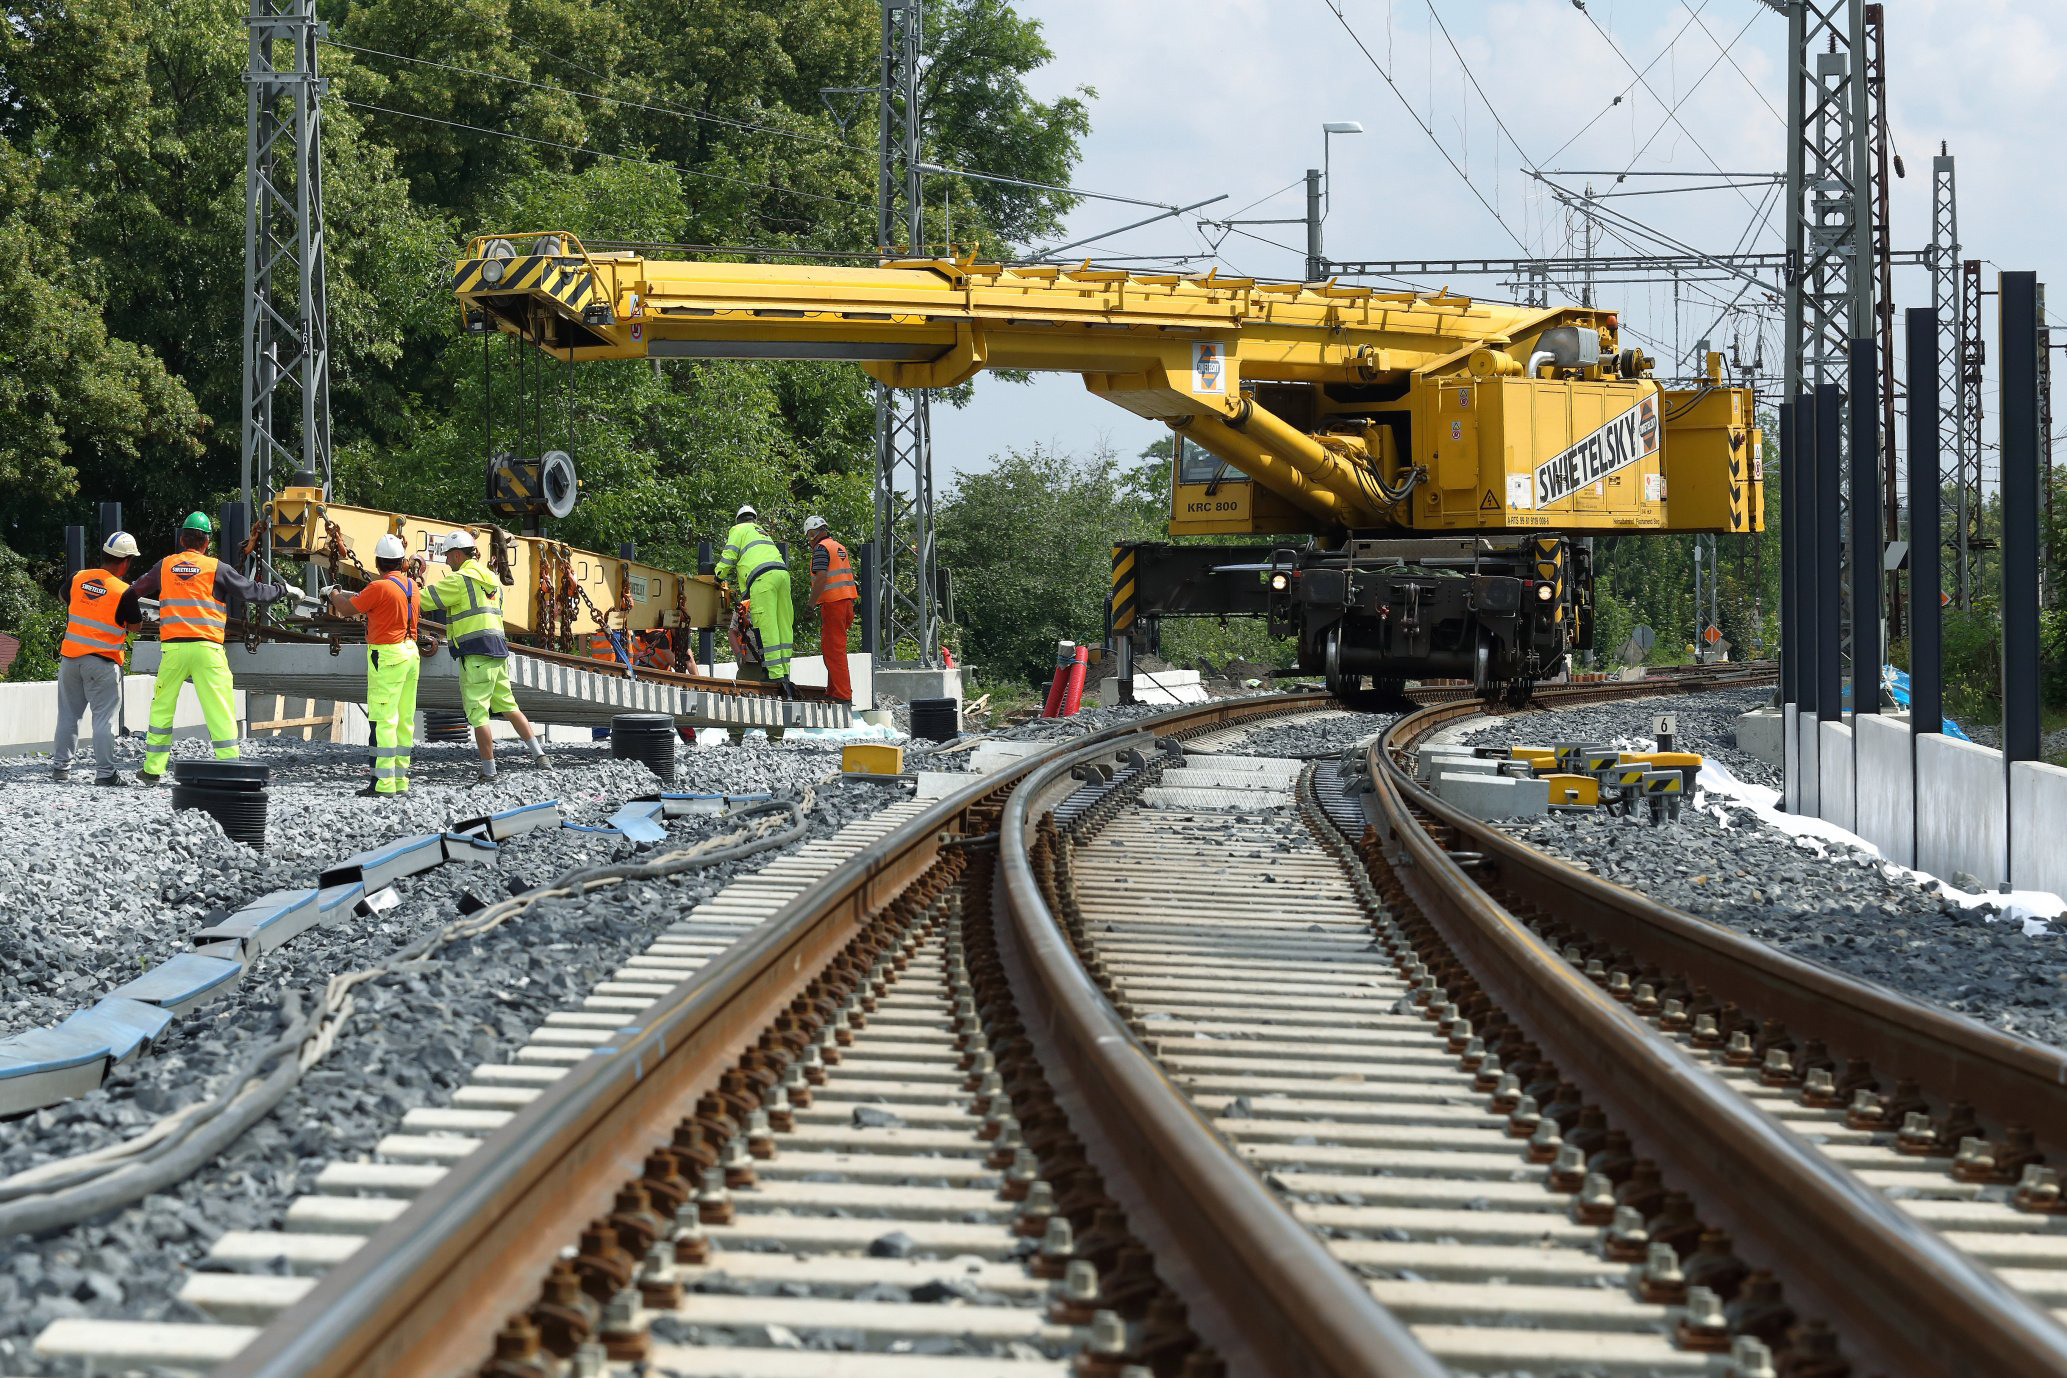 Obnova železniční stanice, Čelákovice - Edilizia ferroviaria